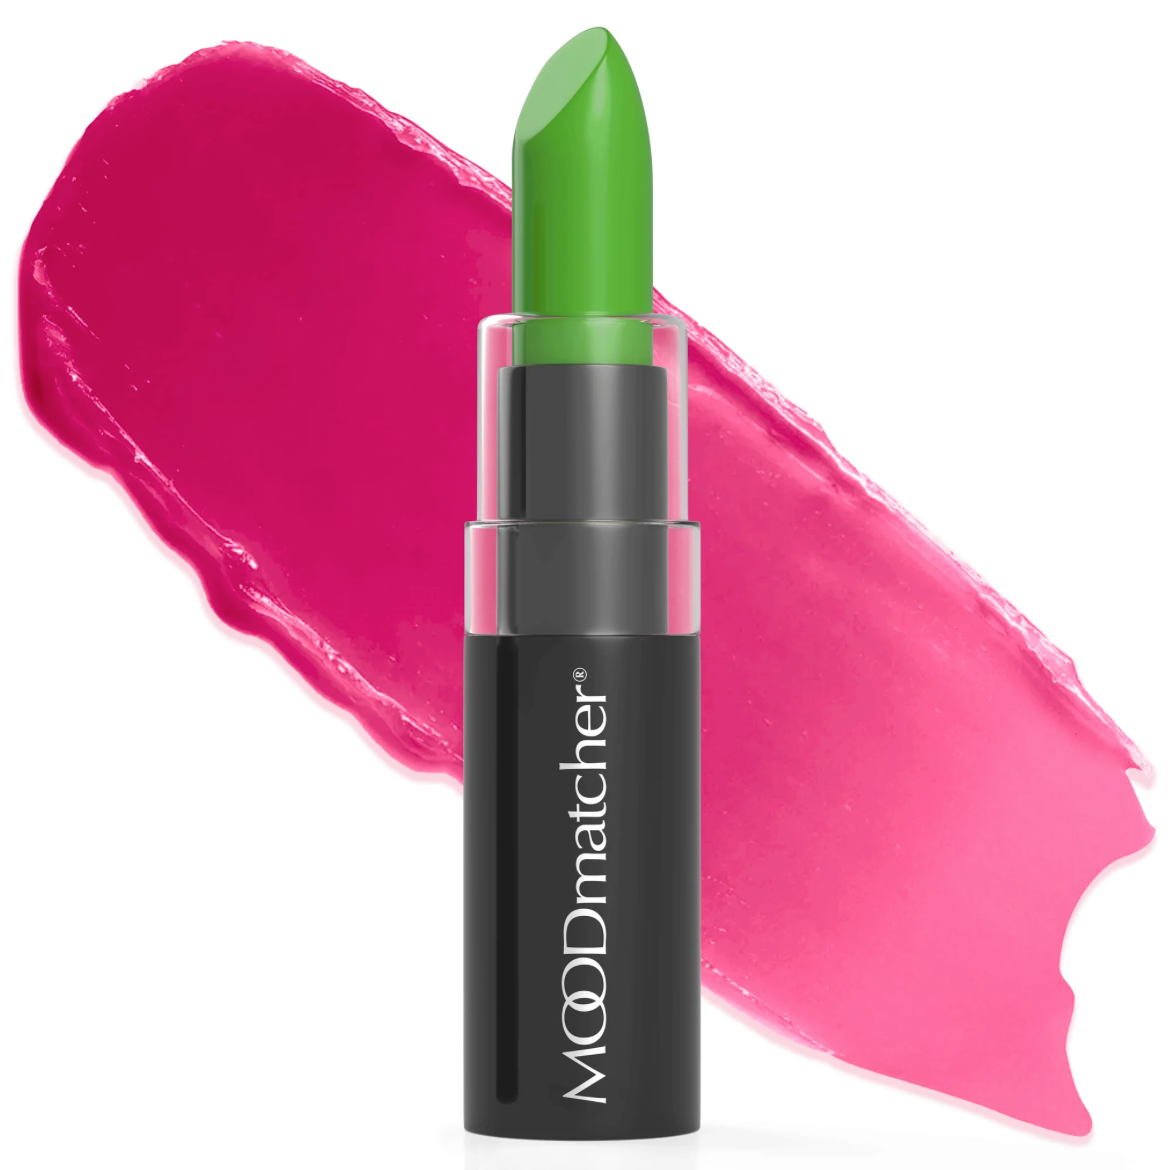 FRAN WILSON Moodmatcher Lipstick - Green - ADDROS.COM